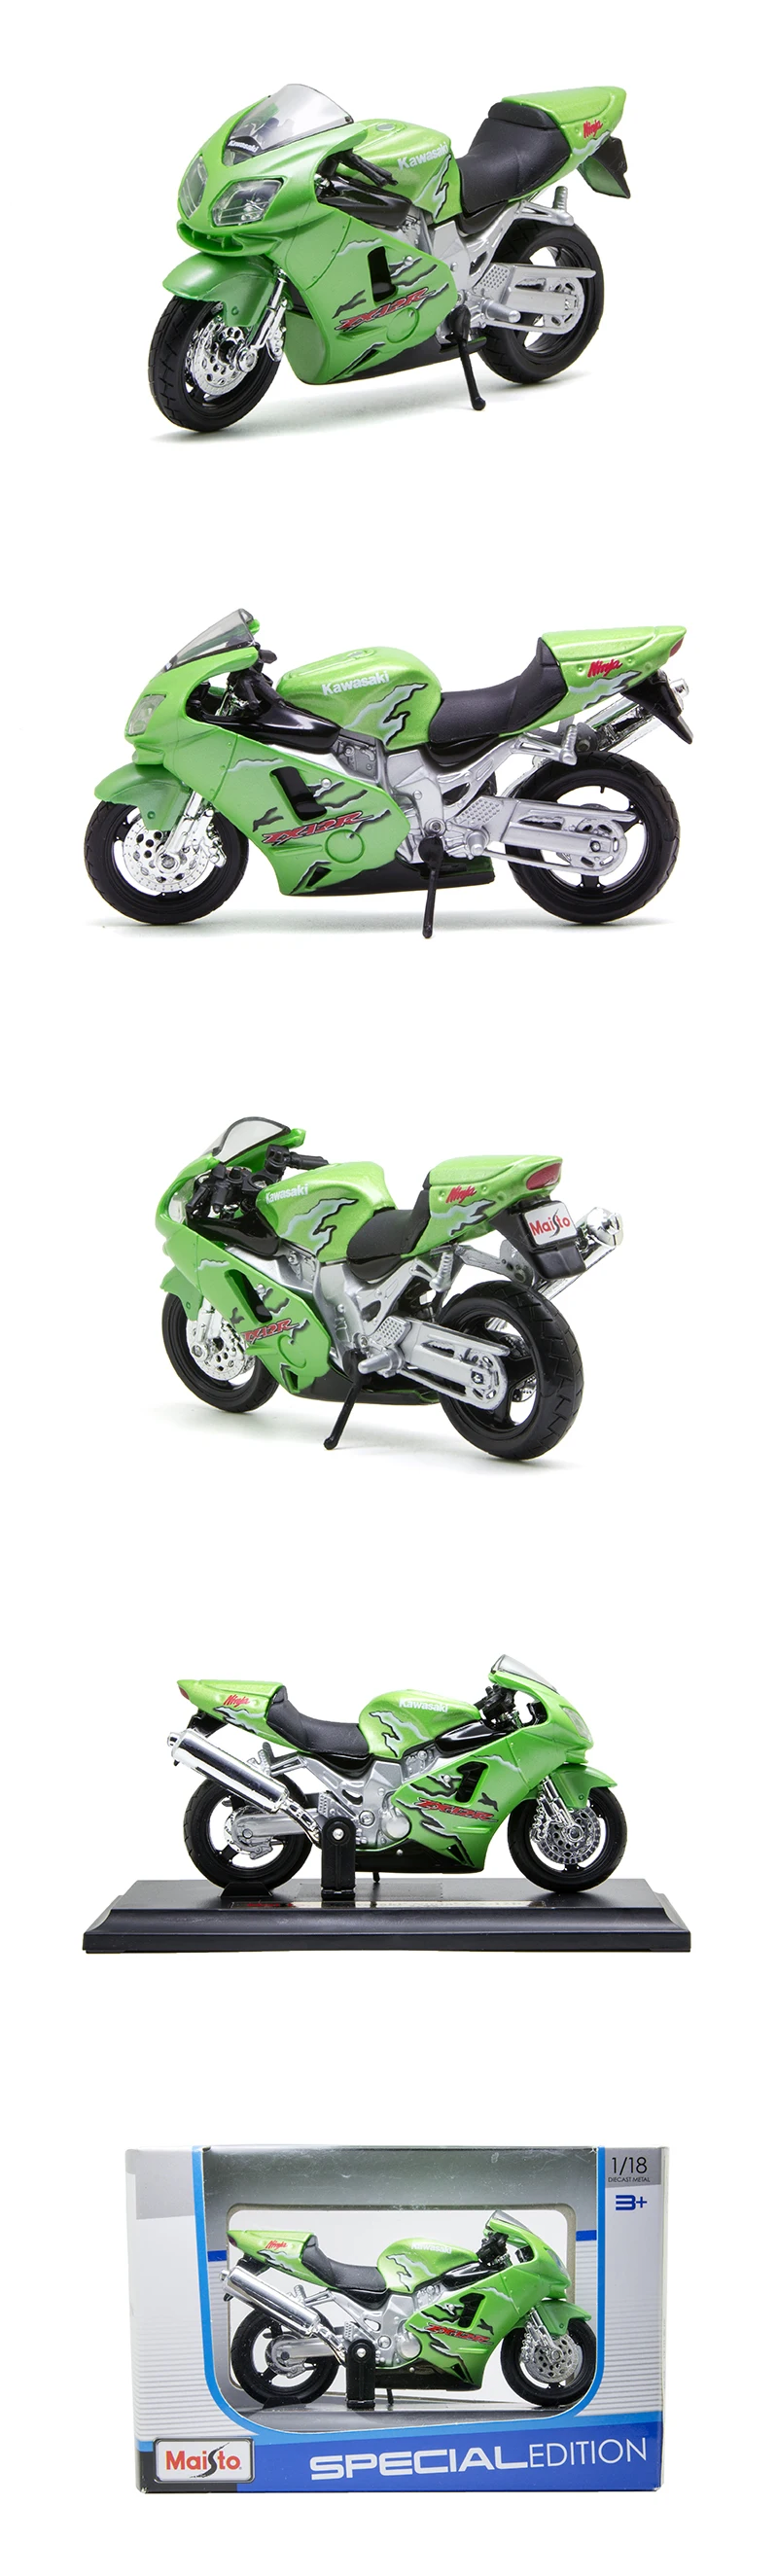 Maisto 1:18 moto rcycle модели Kawasaki Ninja ZX12R зеленый мото литой пластик мото миниатюрная гоночная игрушка для коллекции подарков